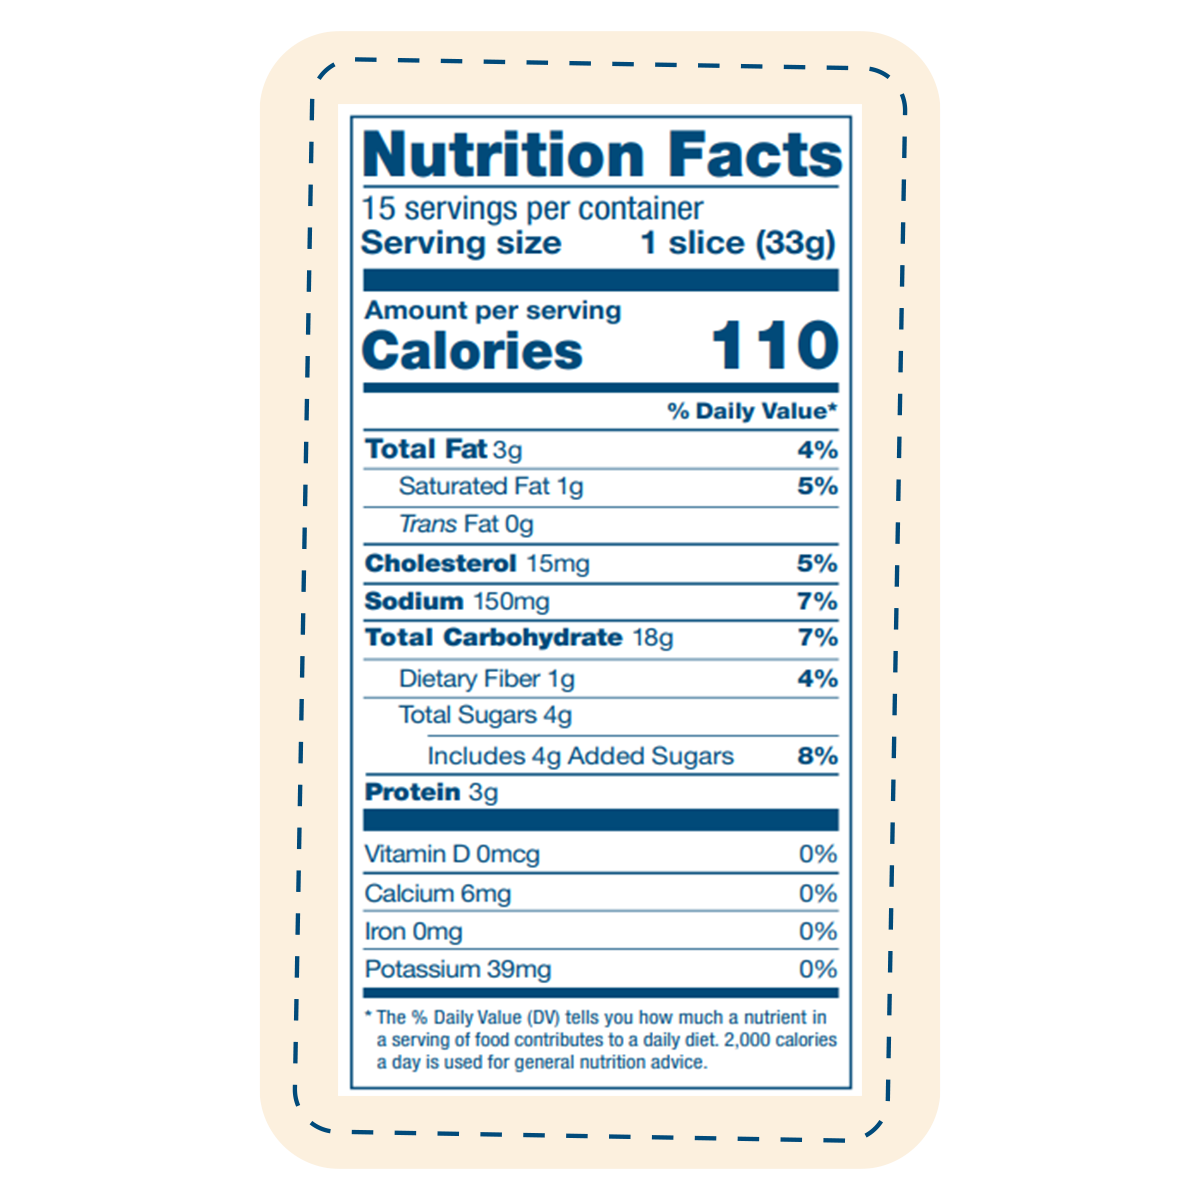 the sliced brioche nutritional label